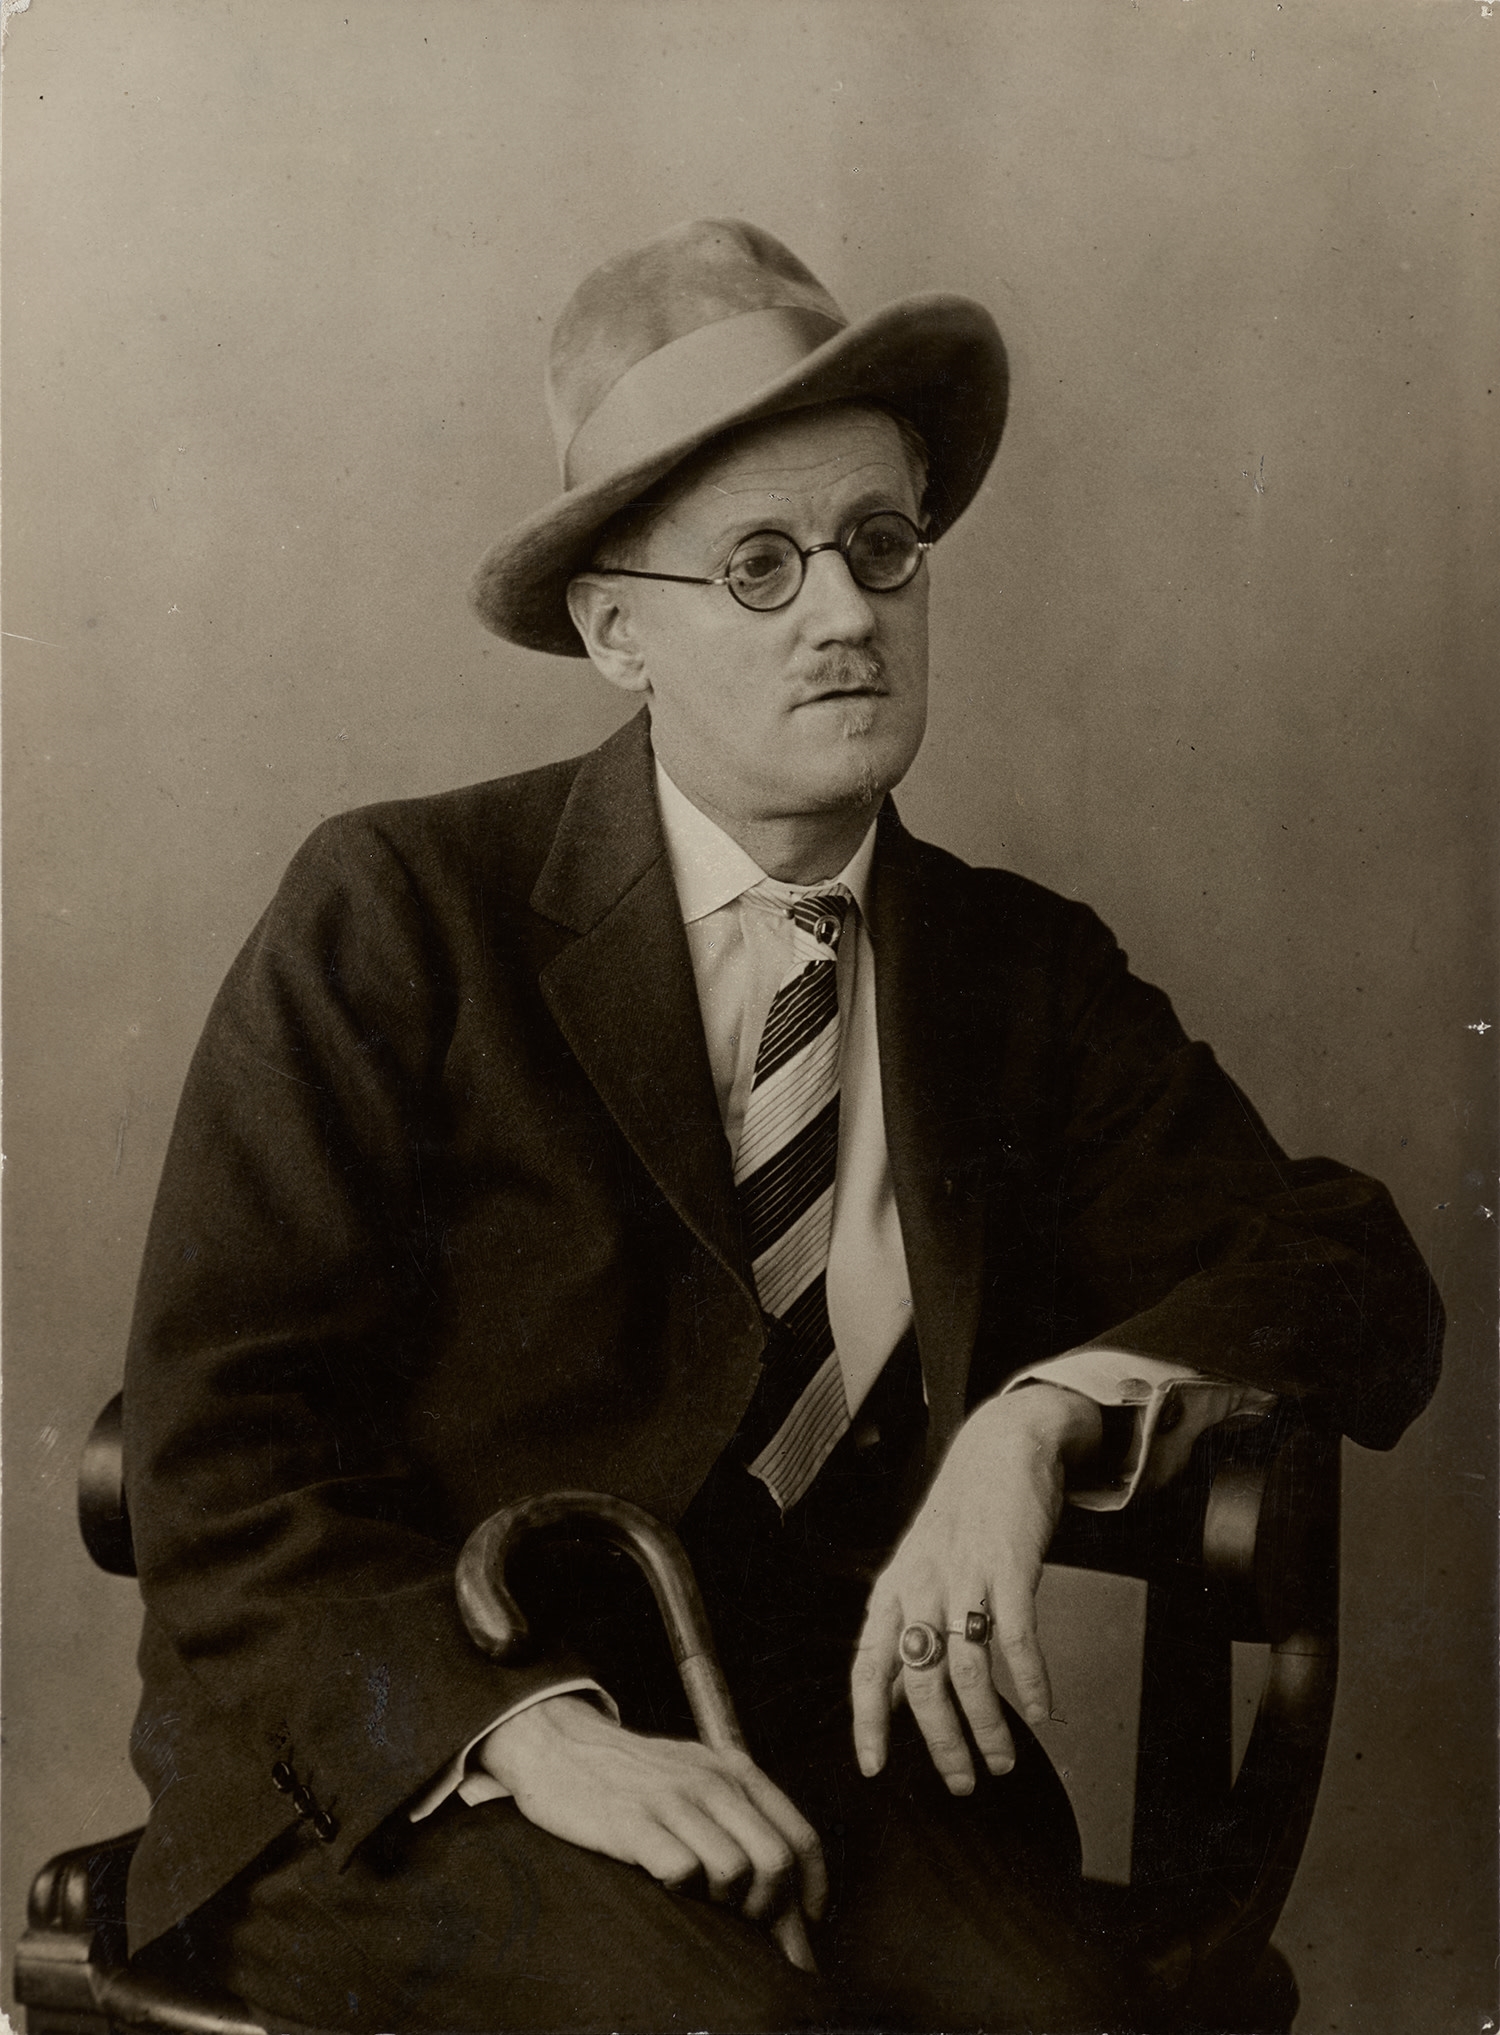 James Joyce by Berenice Abbott, 1928